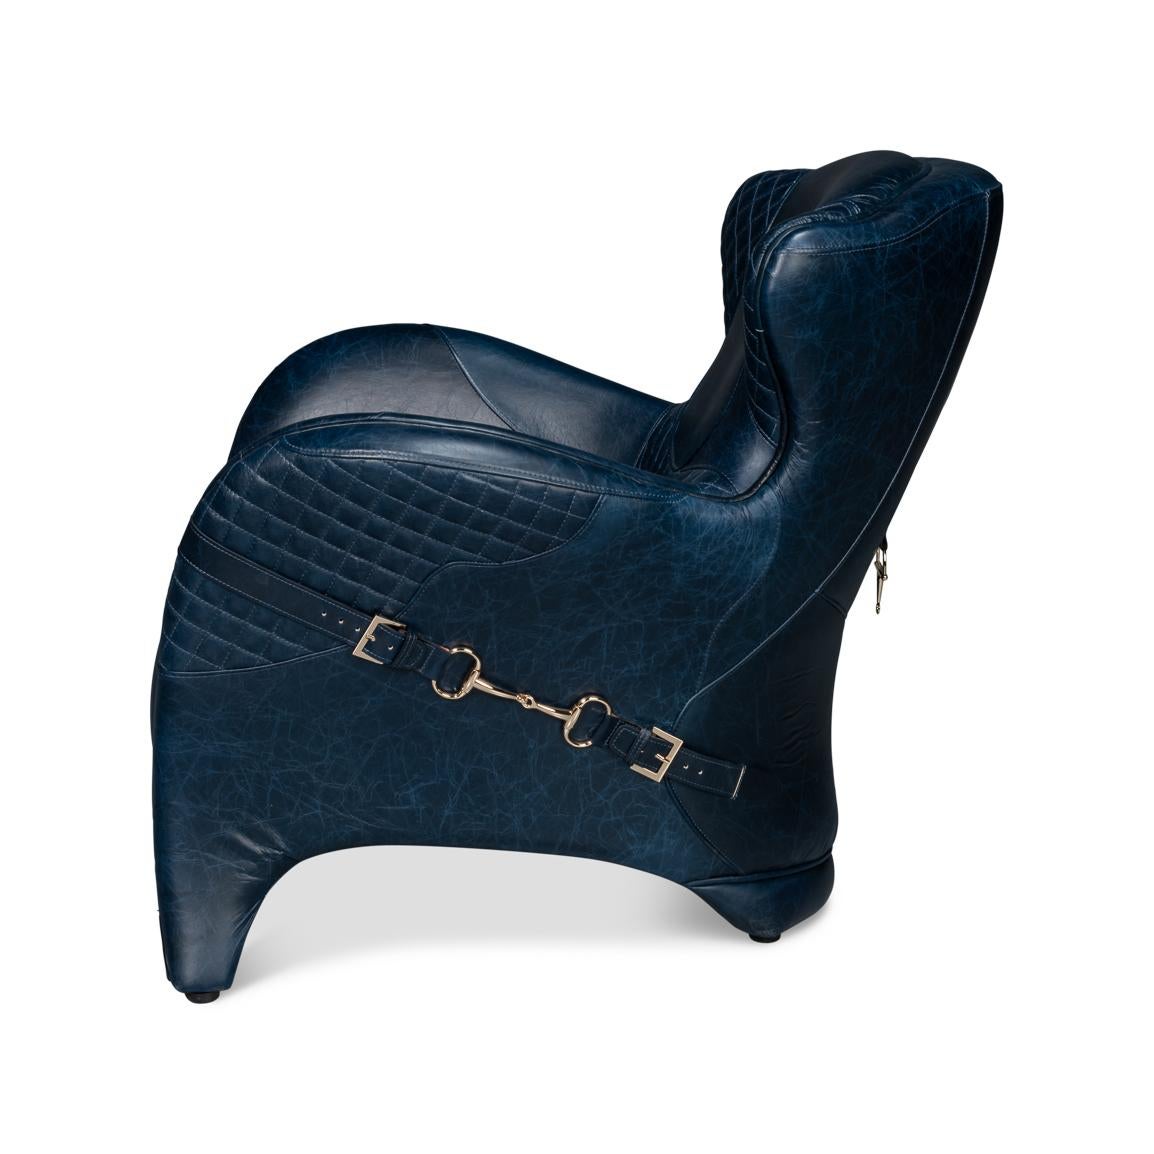 Moderne The Moderns fauteuil en cuir matelassé bleu en vente